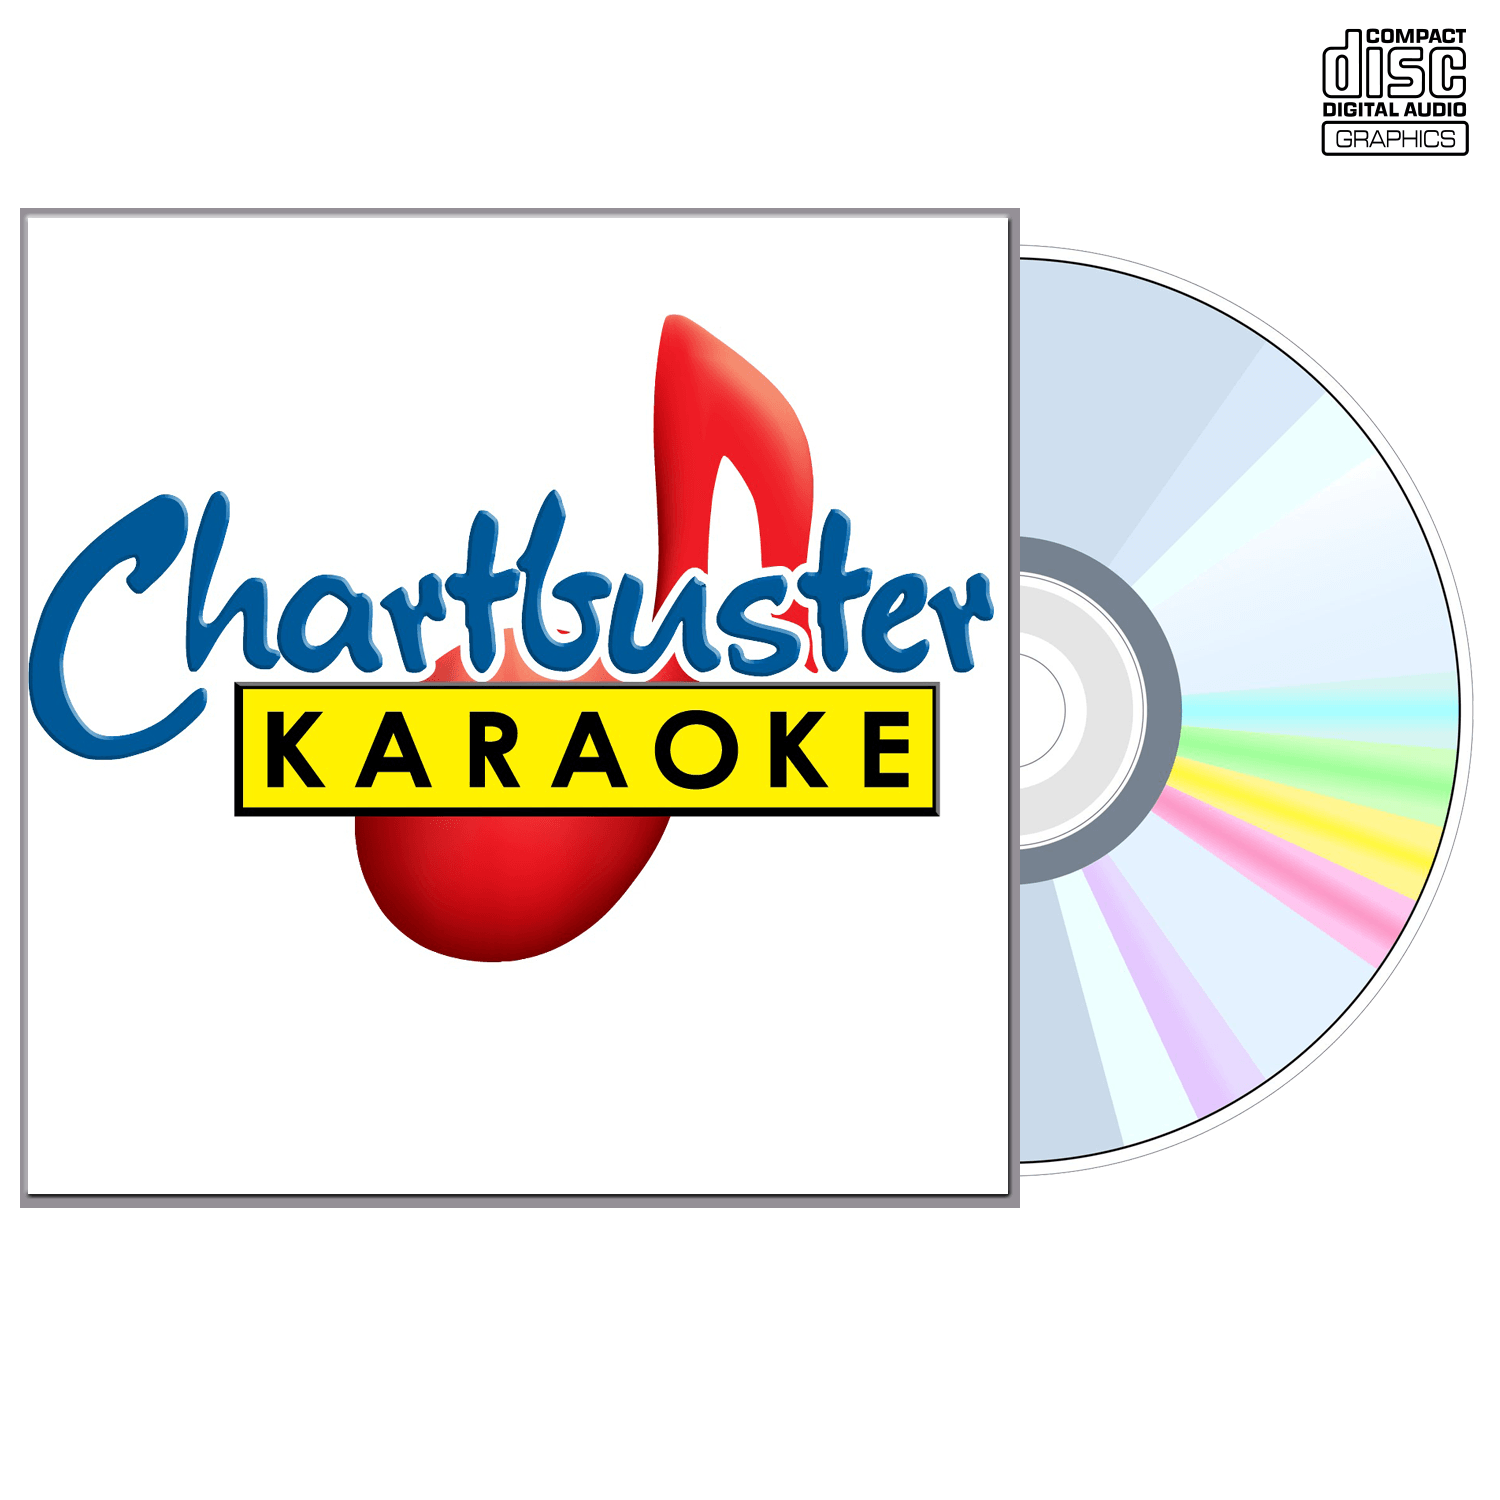 Martina Mcbride Vol 2 - CD+G - Chartbuster Karaoke - Karaoke Home Entertainment